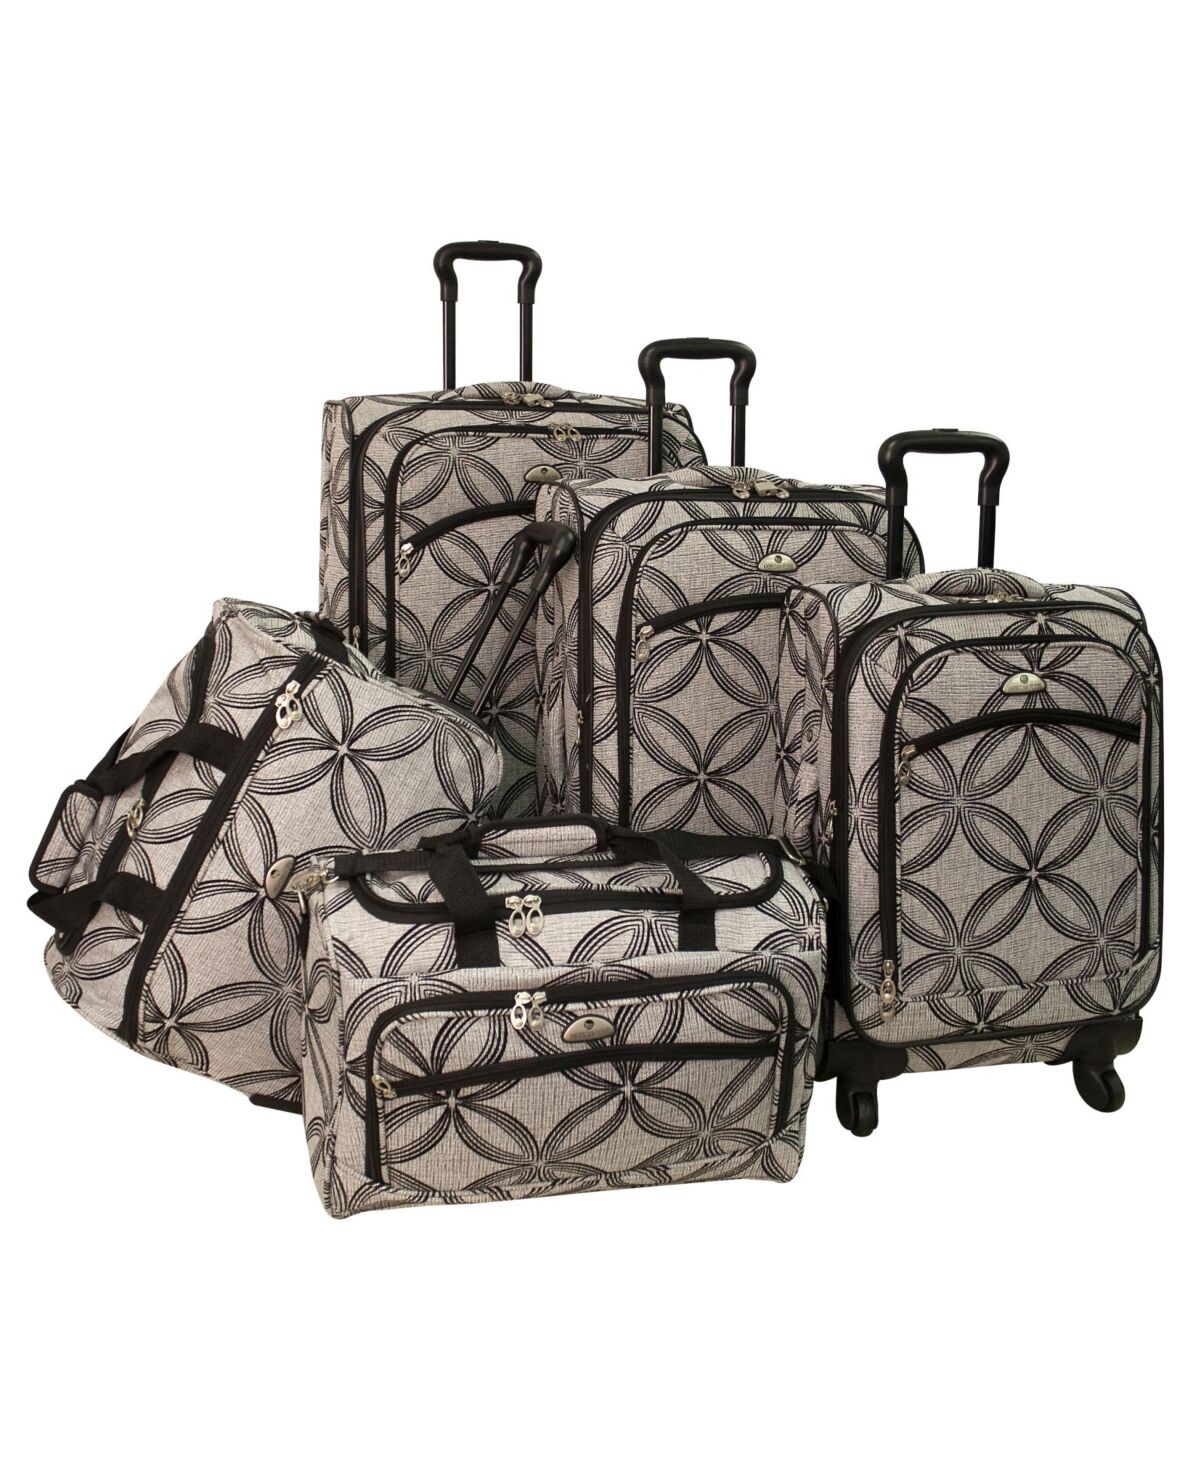 American Flyer Clover 5 Piece Spinner Luggage Set - Black